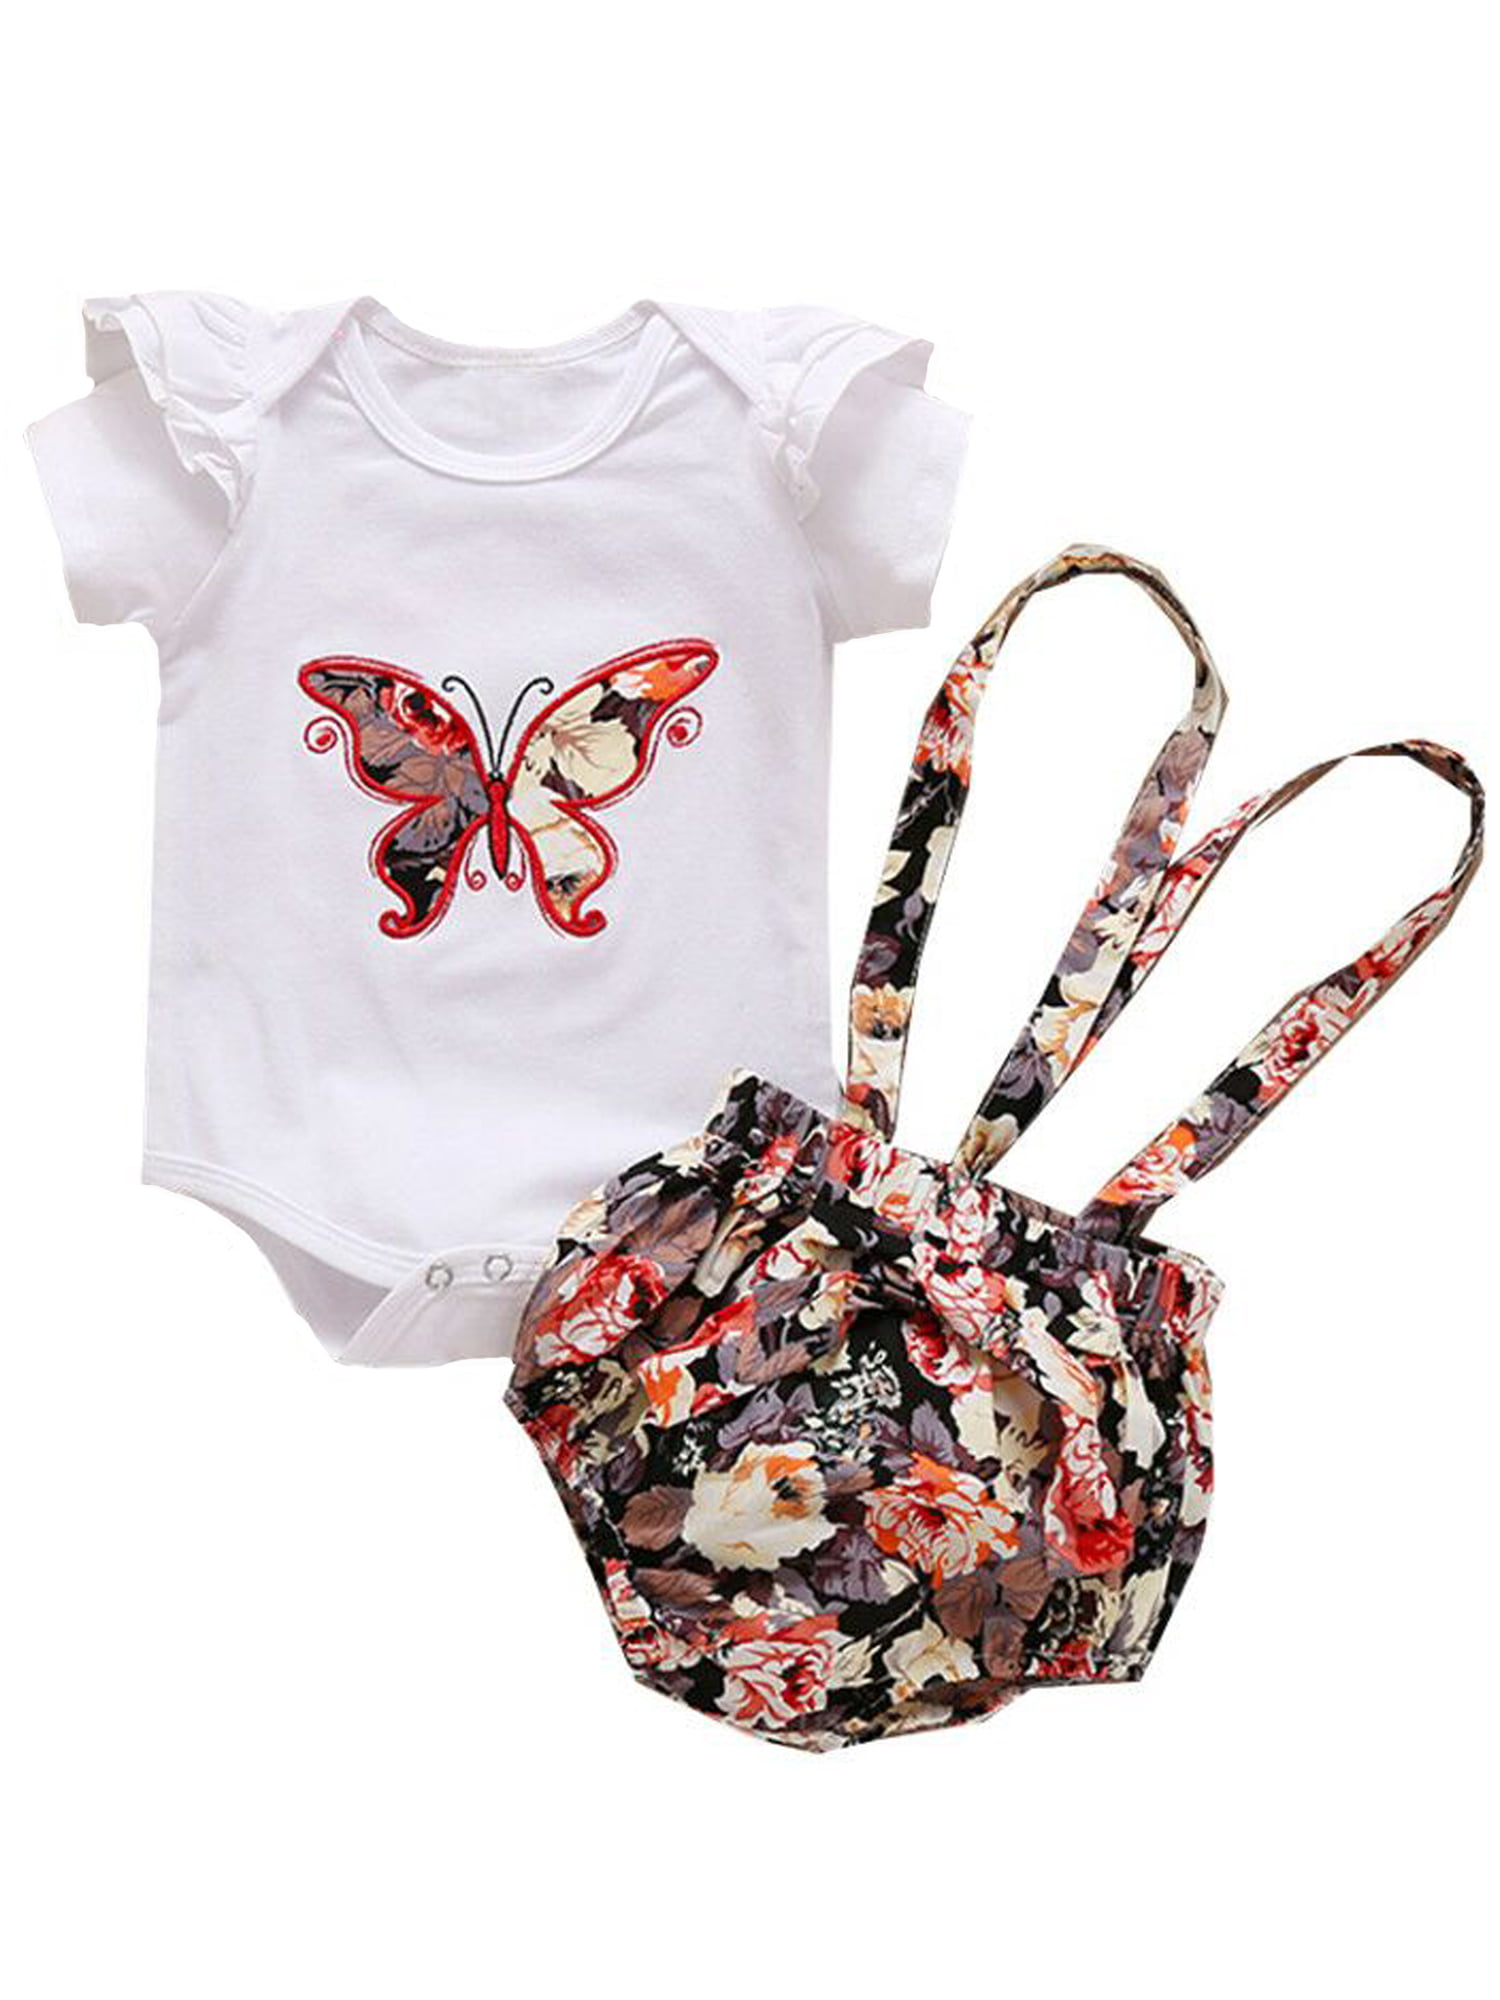 Newborn Infant Baby Girls Butterfly Print Short Sleeve Romper Suspender Skirt Clothes 